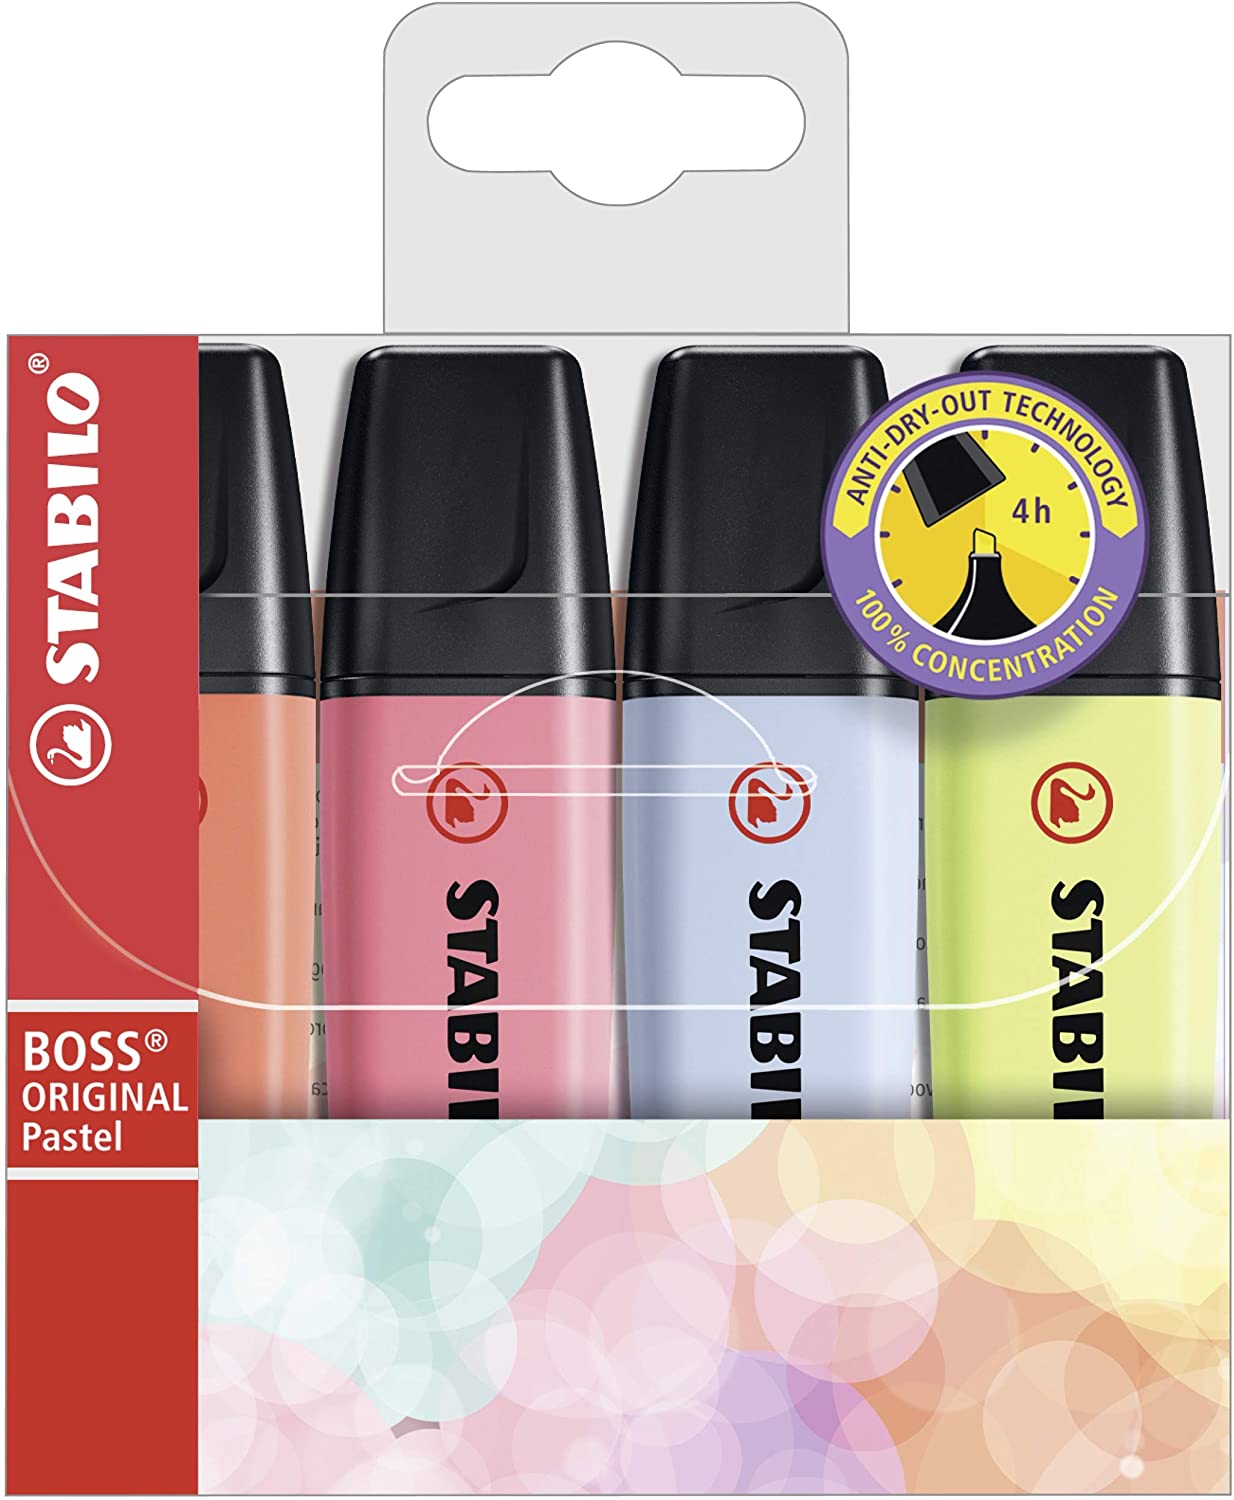 Stabilo Boss 70 Pastel Pack de 4 Marcadores Fluorescentes - Trazo entre 2 y 5mm - Recargable - Tinta